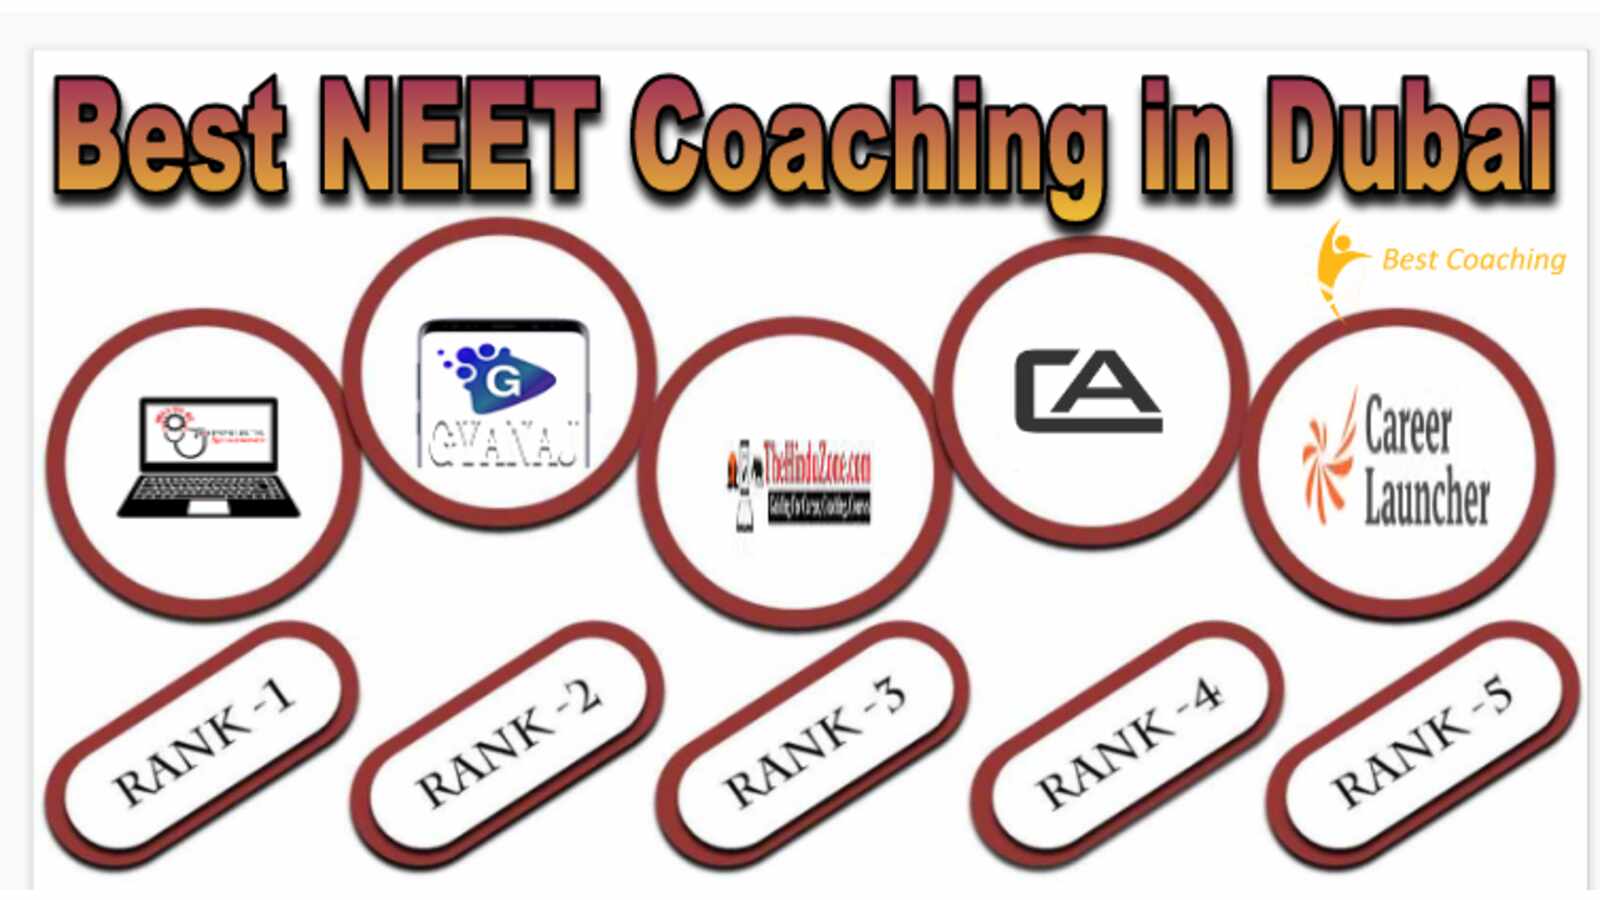 Best NEET Coaching in Dubai